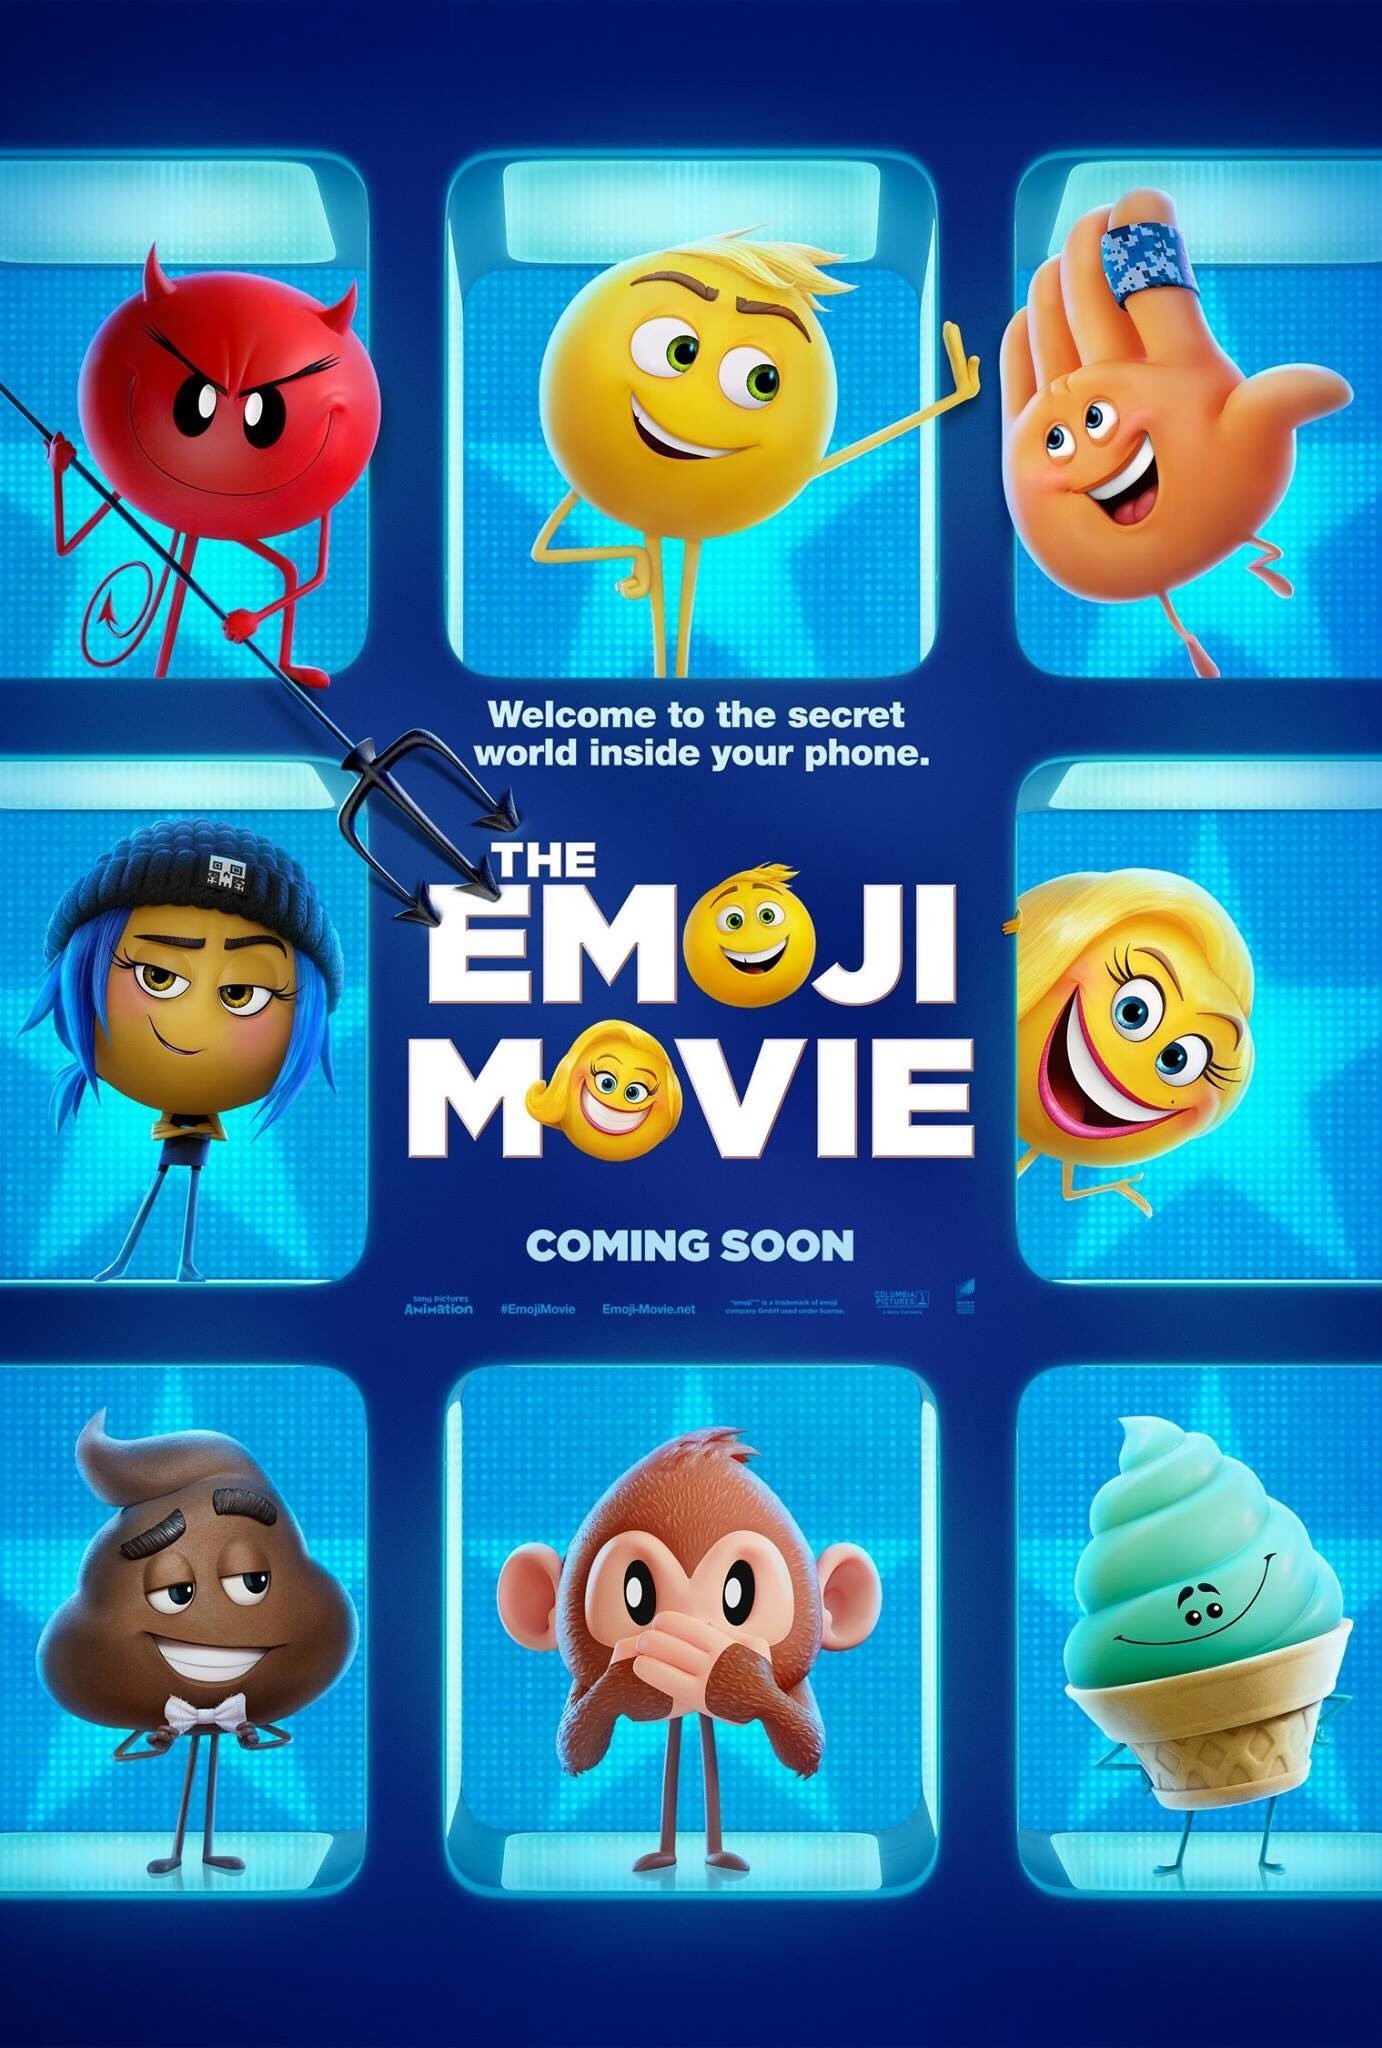 1382x2048 The Emoji Movie iPhone Desktop Wallpapers With 1382Ã2048